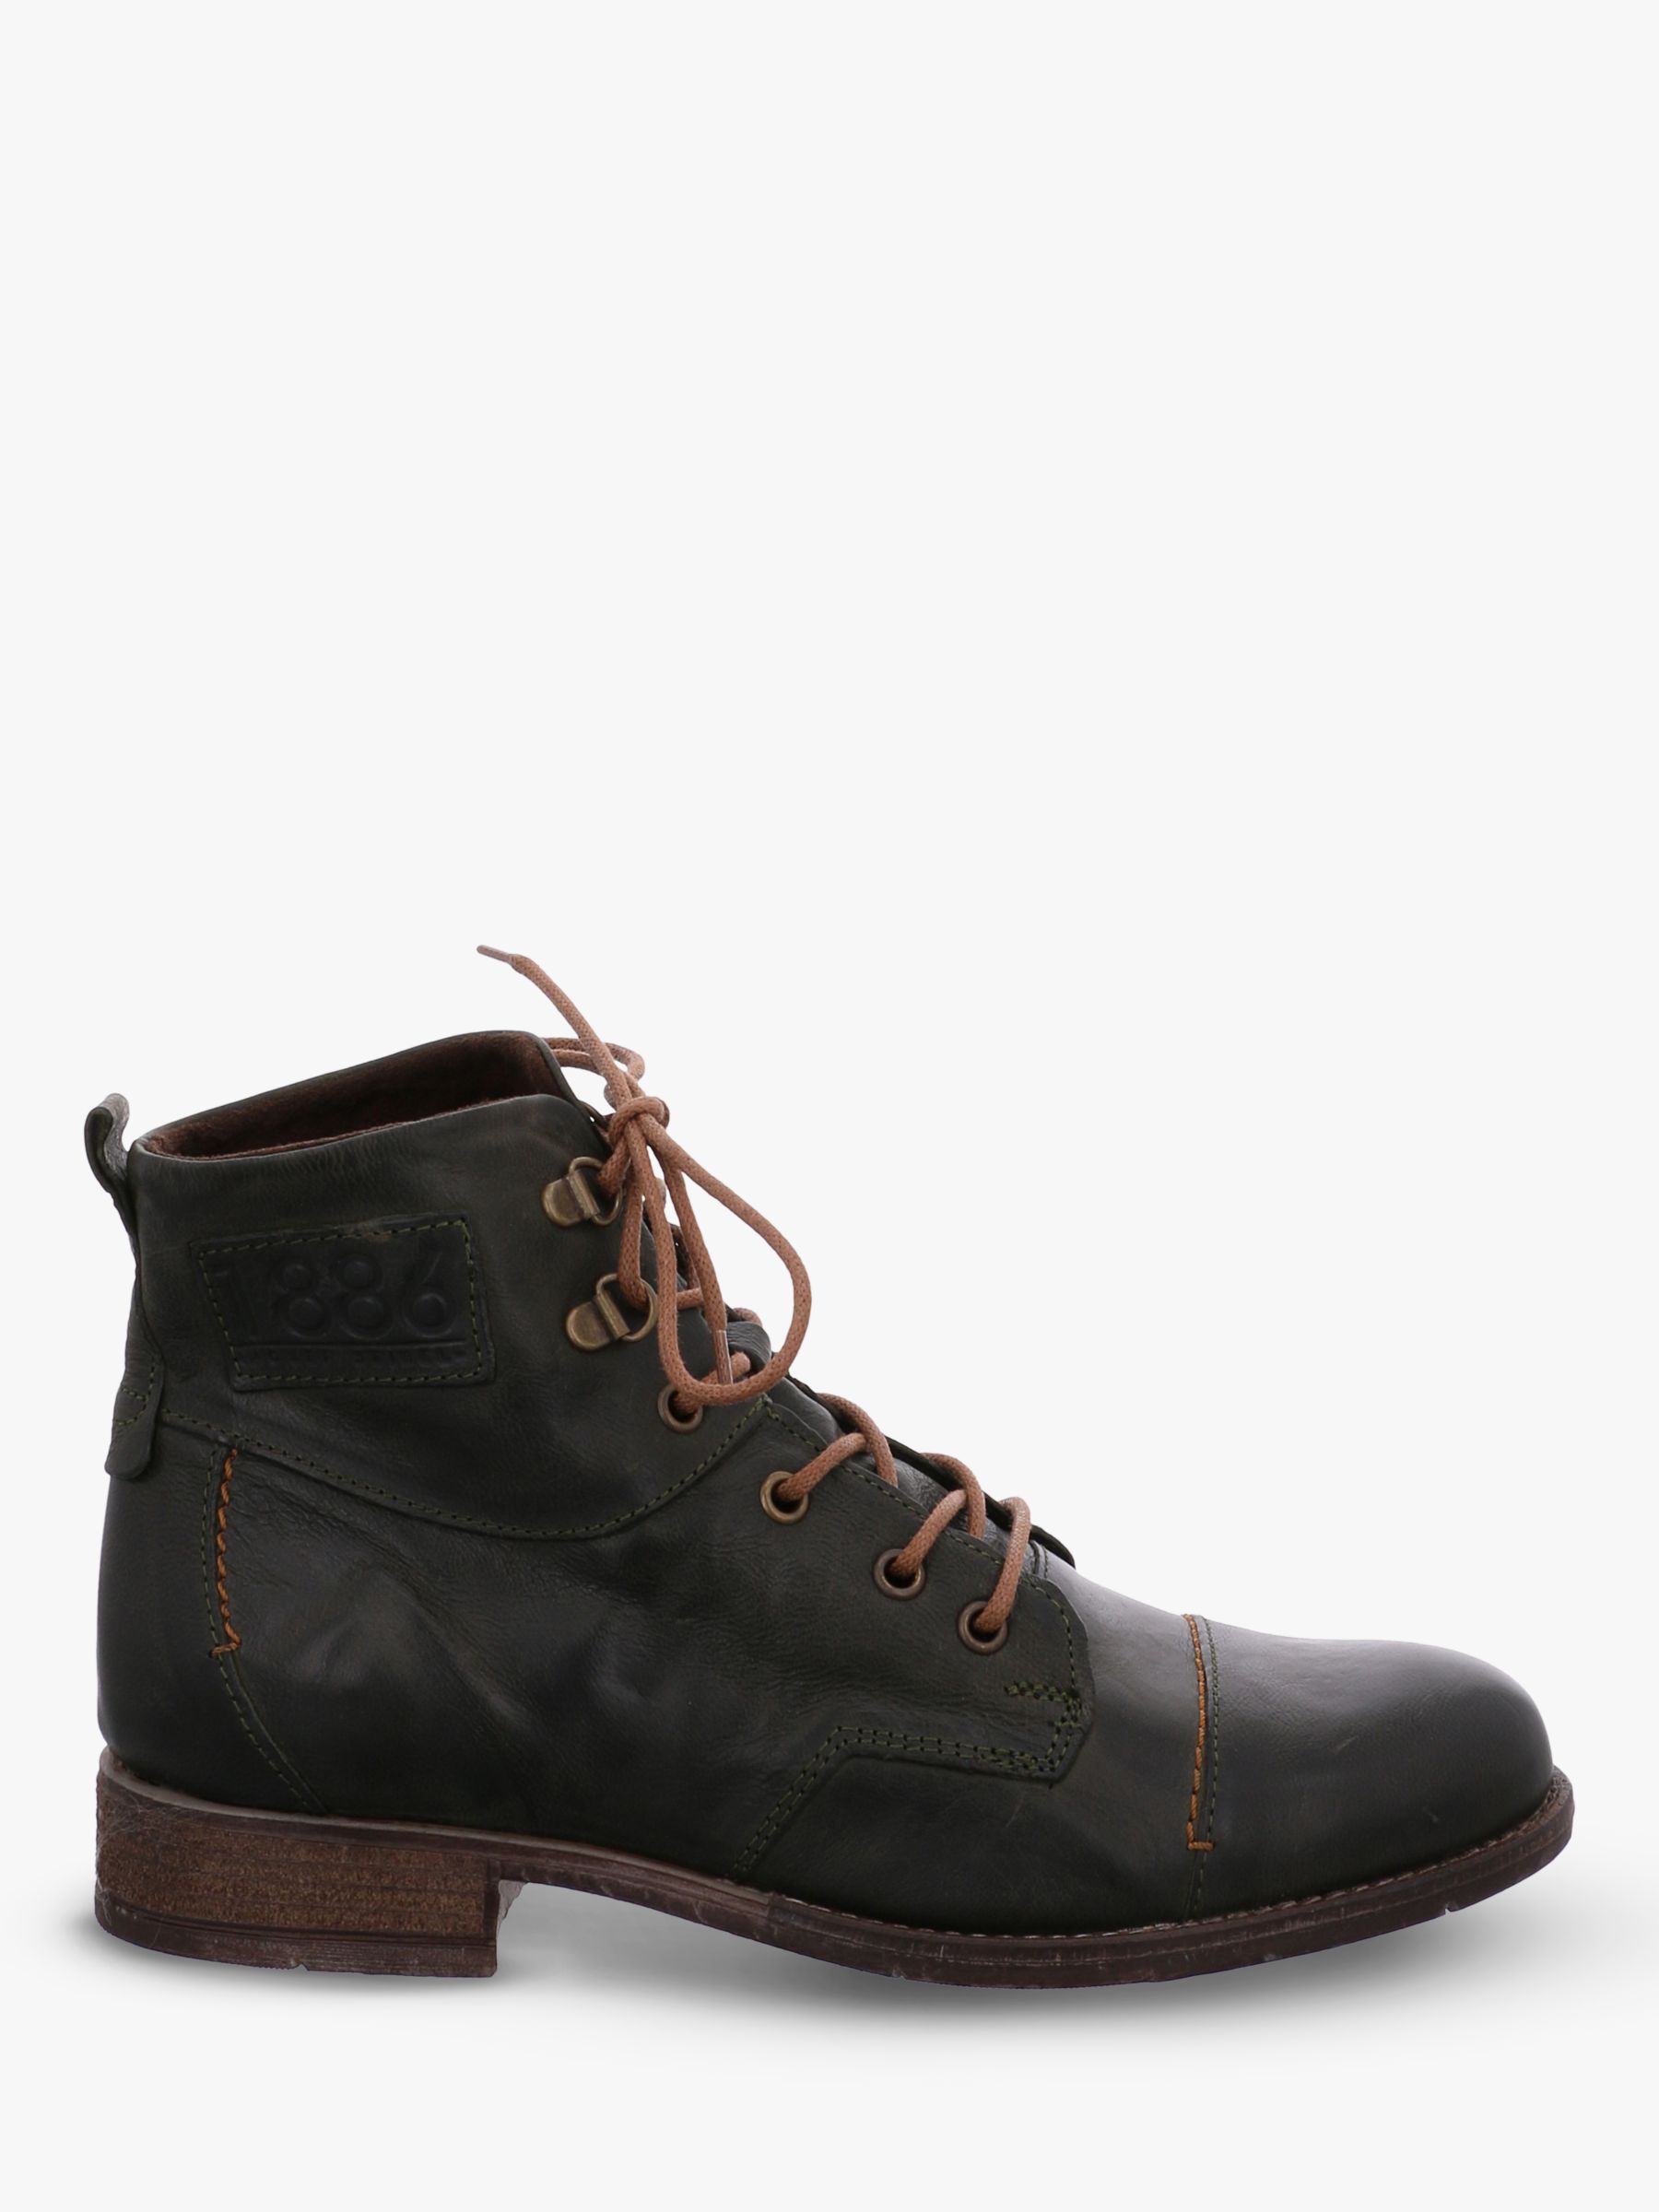 Josef Seibel Sienna 17 Leather Block Heel Lace Up Ankle Boots, Bosco